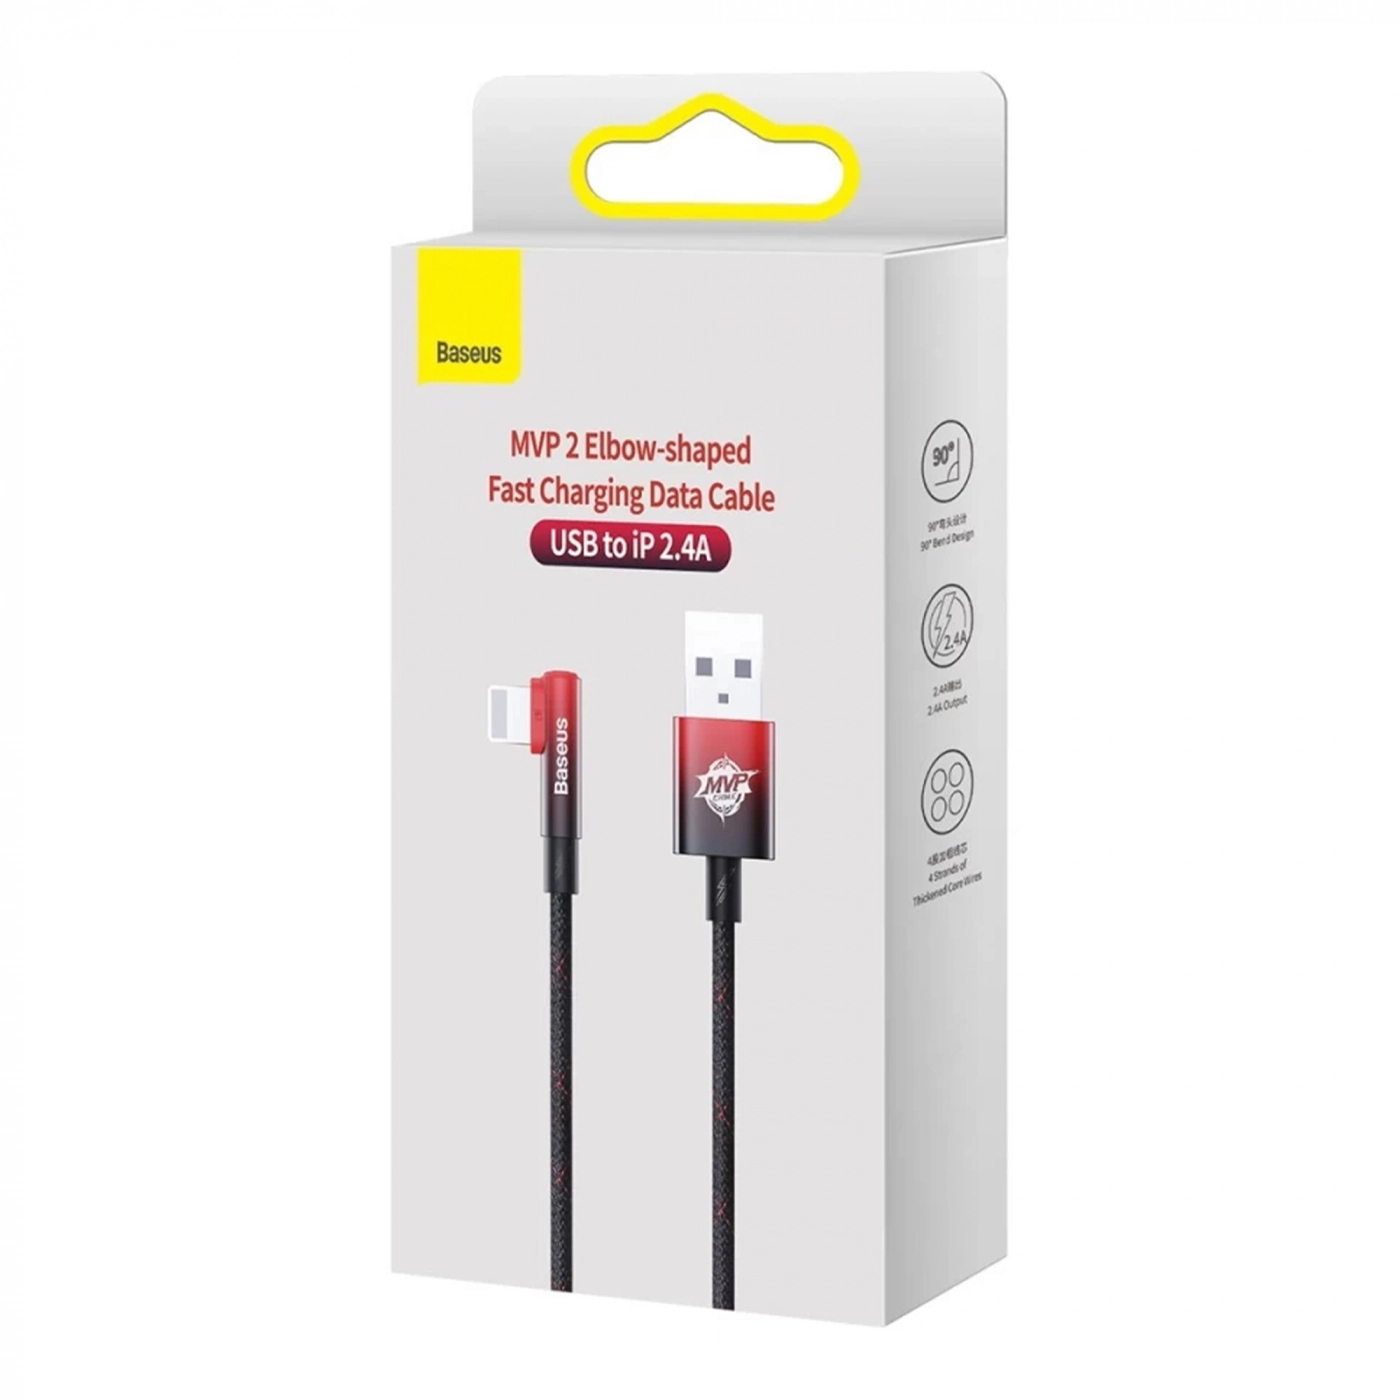 Купить Кабель Baseus MVP 2 Elbow-shaped Fast Charging Data Cable USB to iP 2.4A 2m Black|Red - фото 8